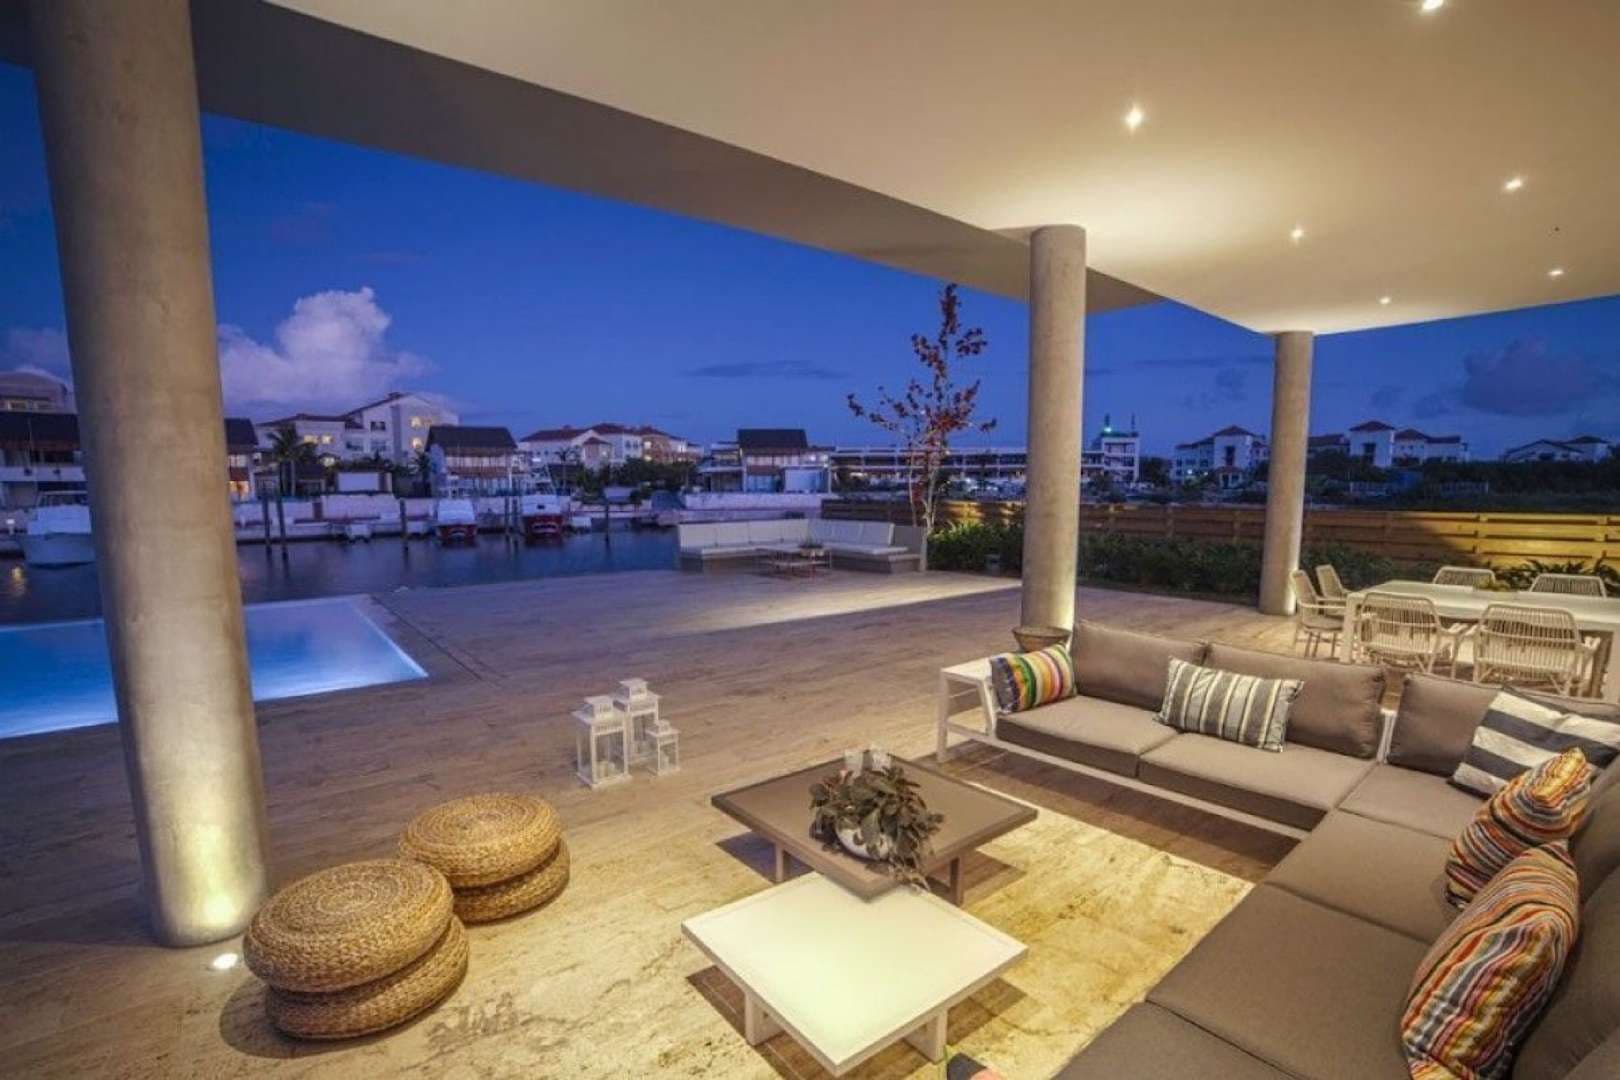  Bedroom Villa For Sale Villa Increible En Casa De Campo Lp05016 1bafa8051bde9a00.jpeg